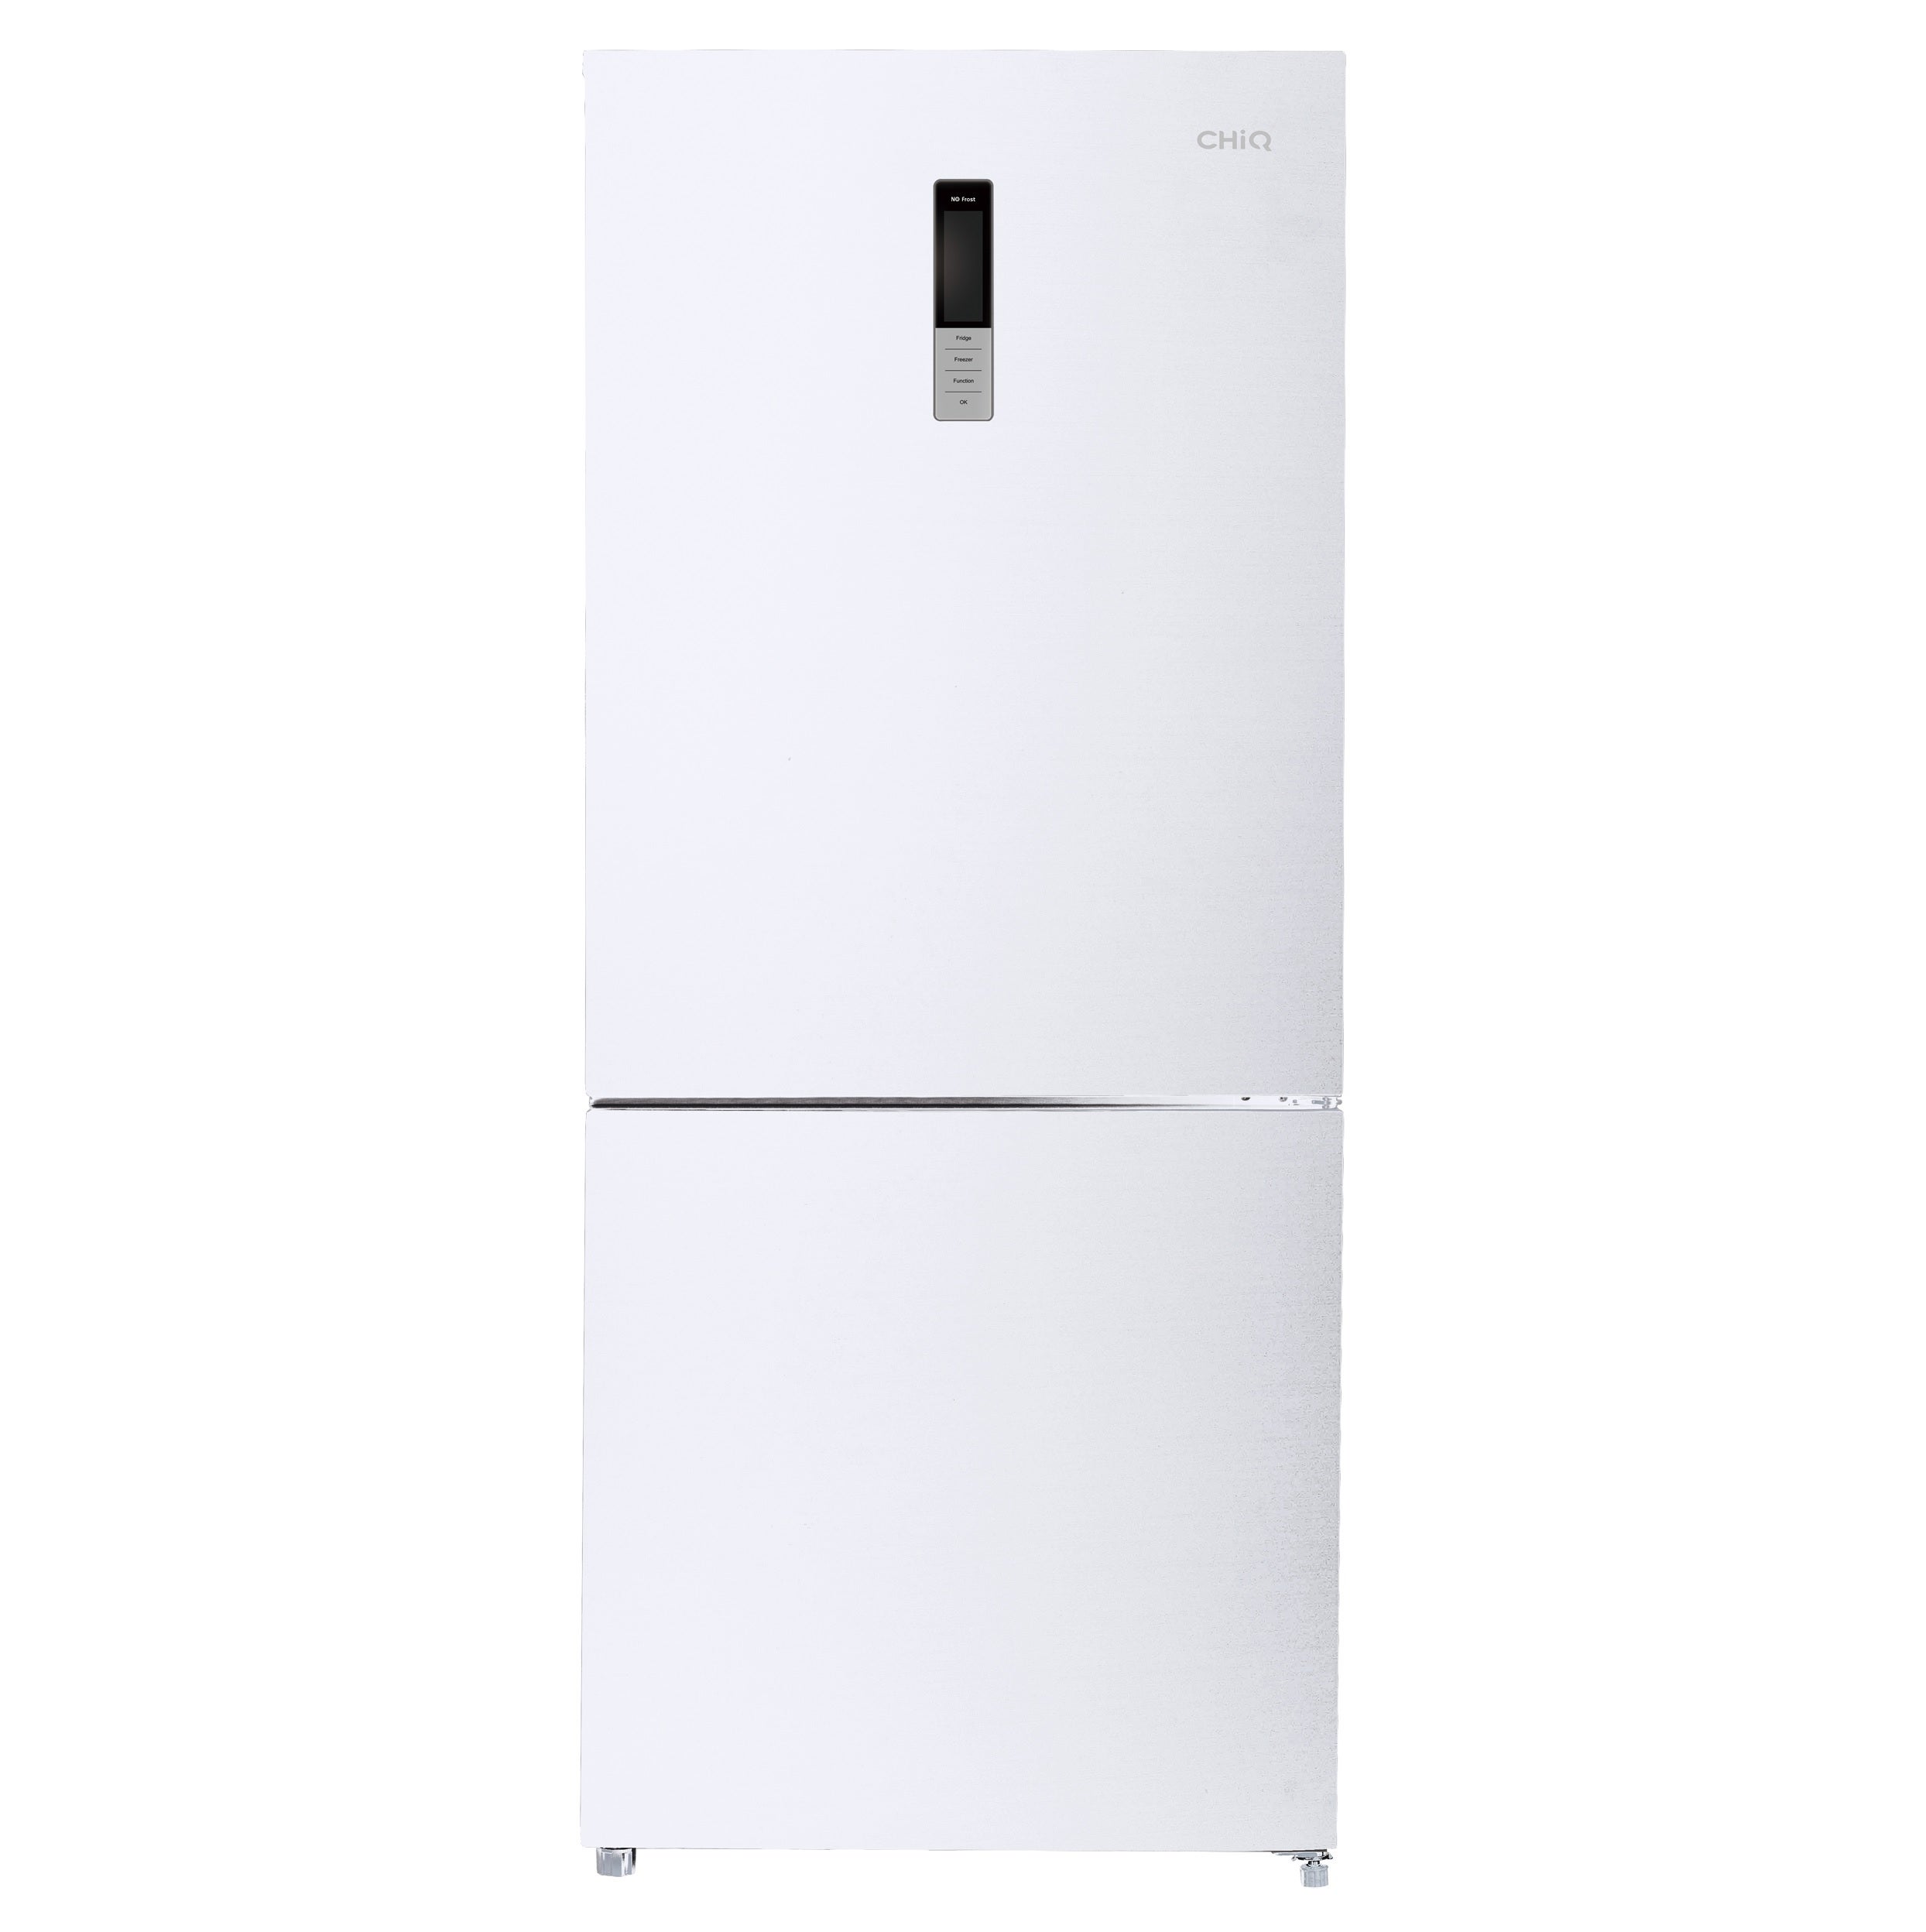 CHiQ CBM396NW Refrigerator